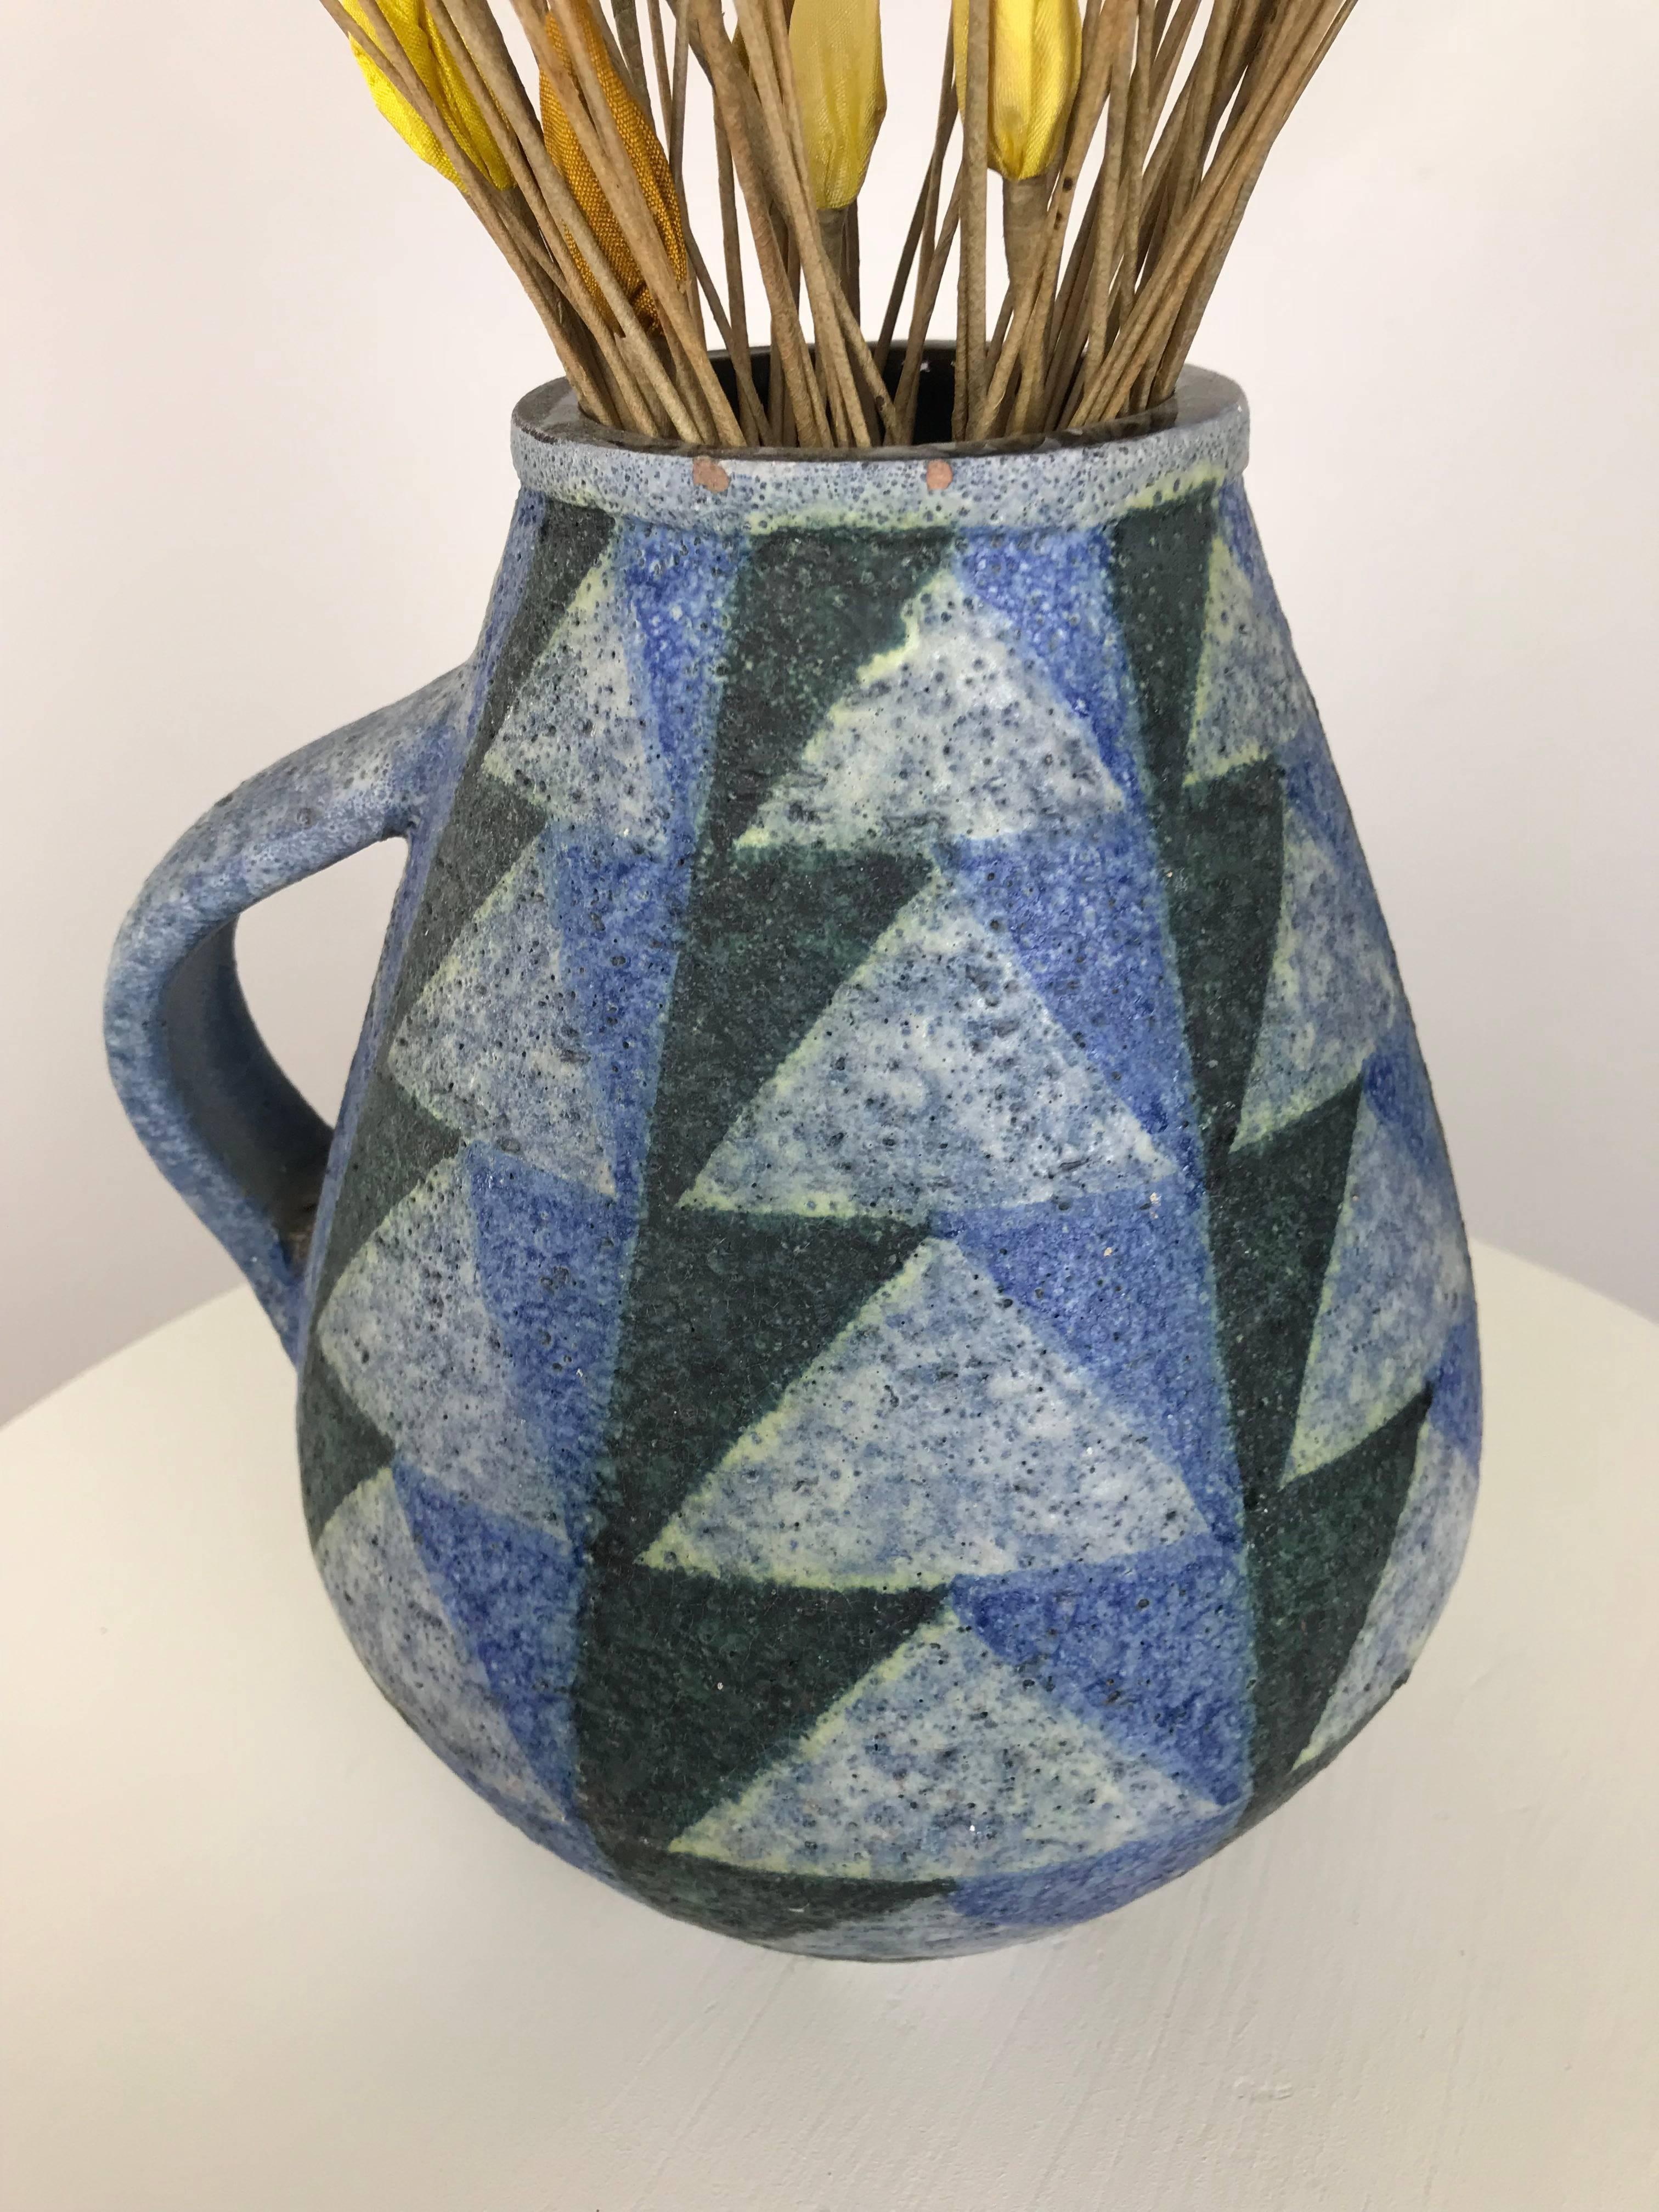 Aldo Londi for Bitossi Raymor Modernist Ceramic Jug or Vase & Faux Flower Spray 1